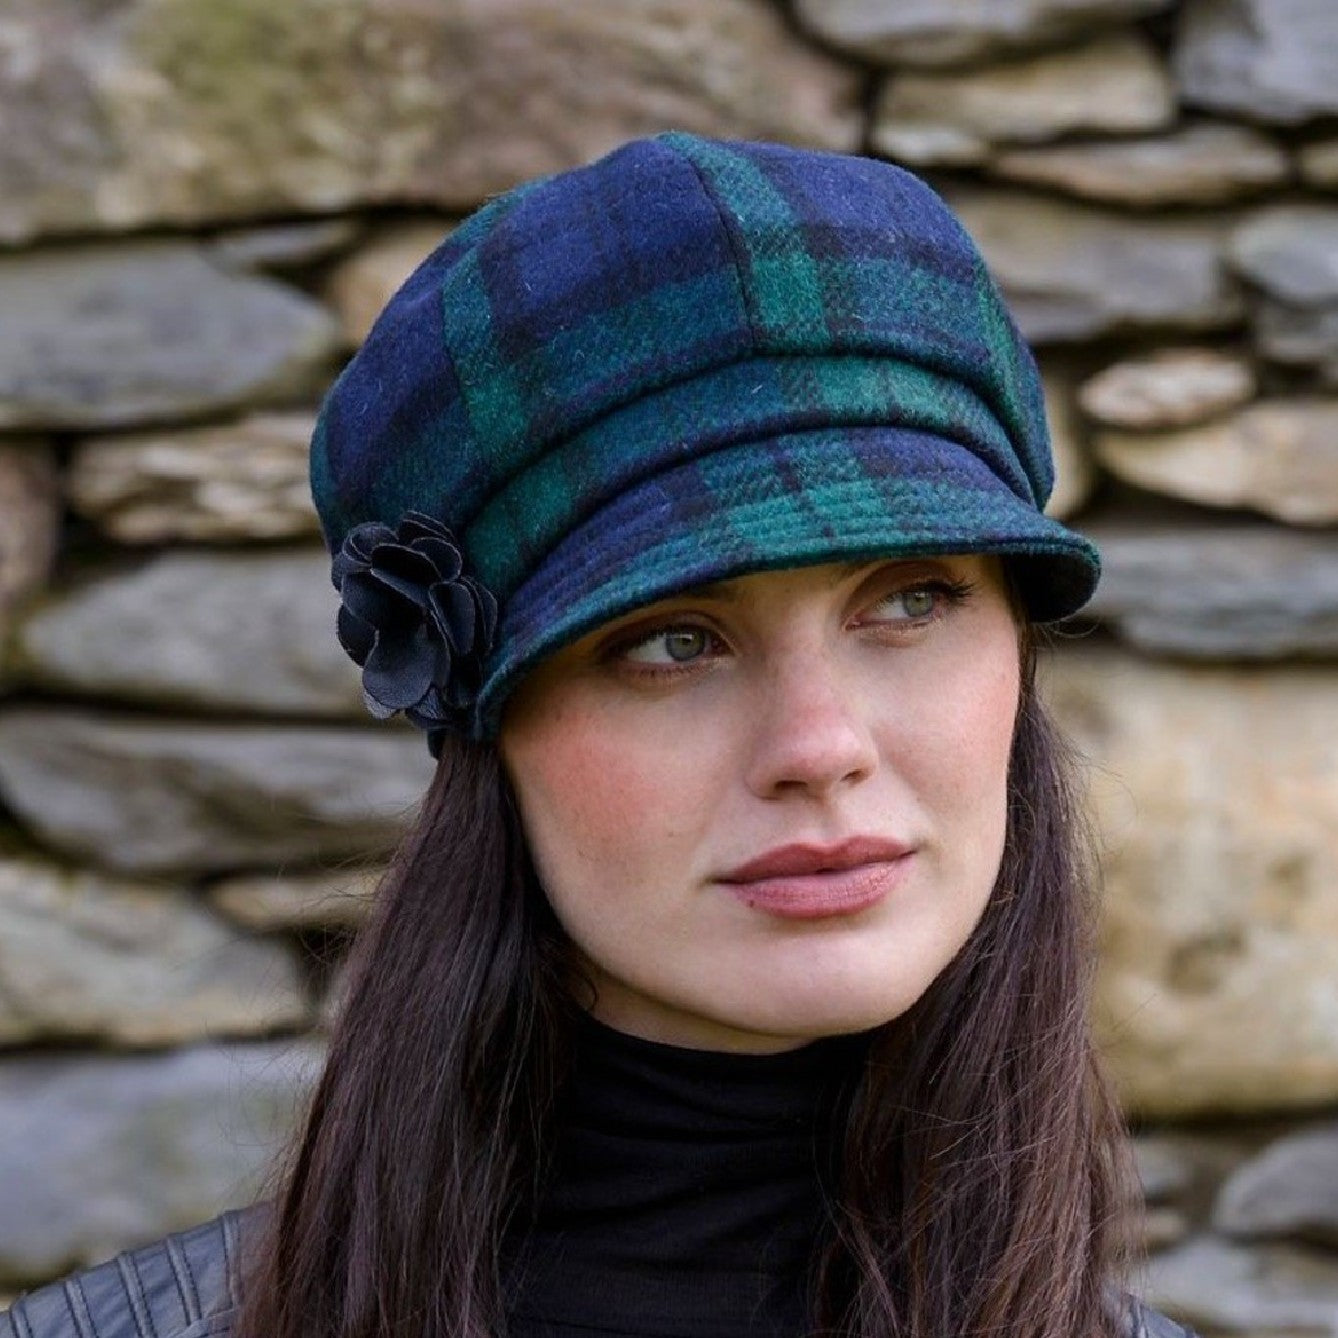 Women's Newsboy Cap, Made in Ireland, 100% Irish Tweed, Fast Shipping